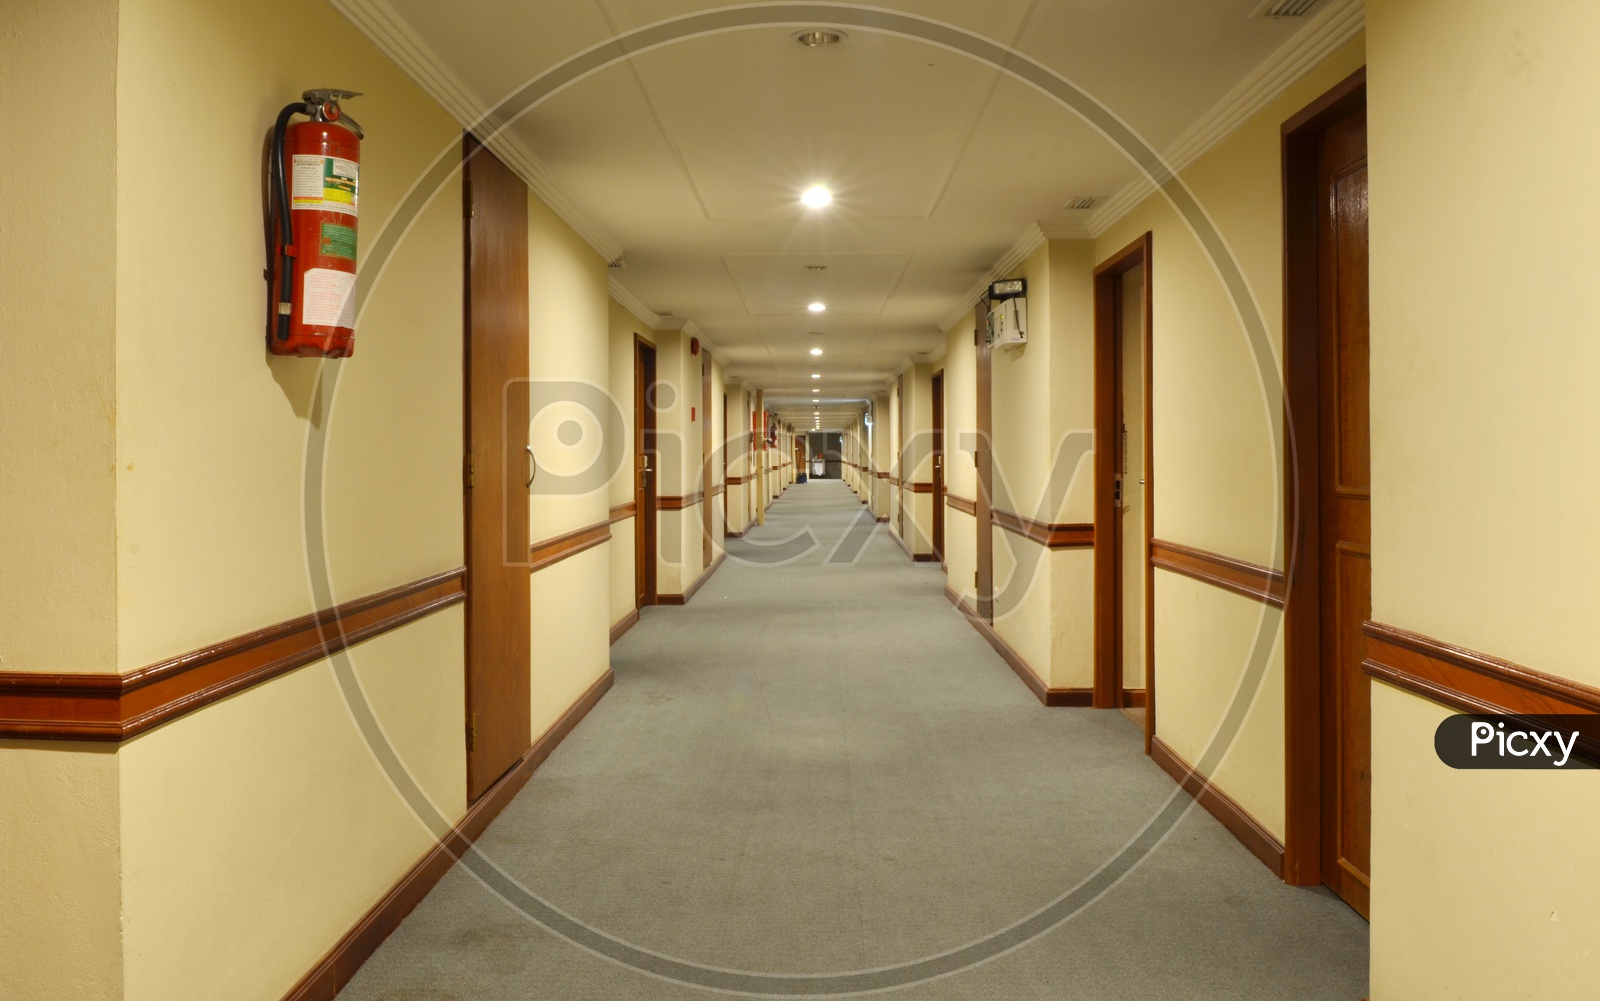 beautiful hotel corridor with carpet